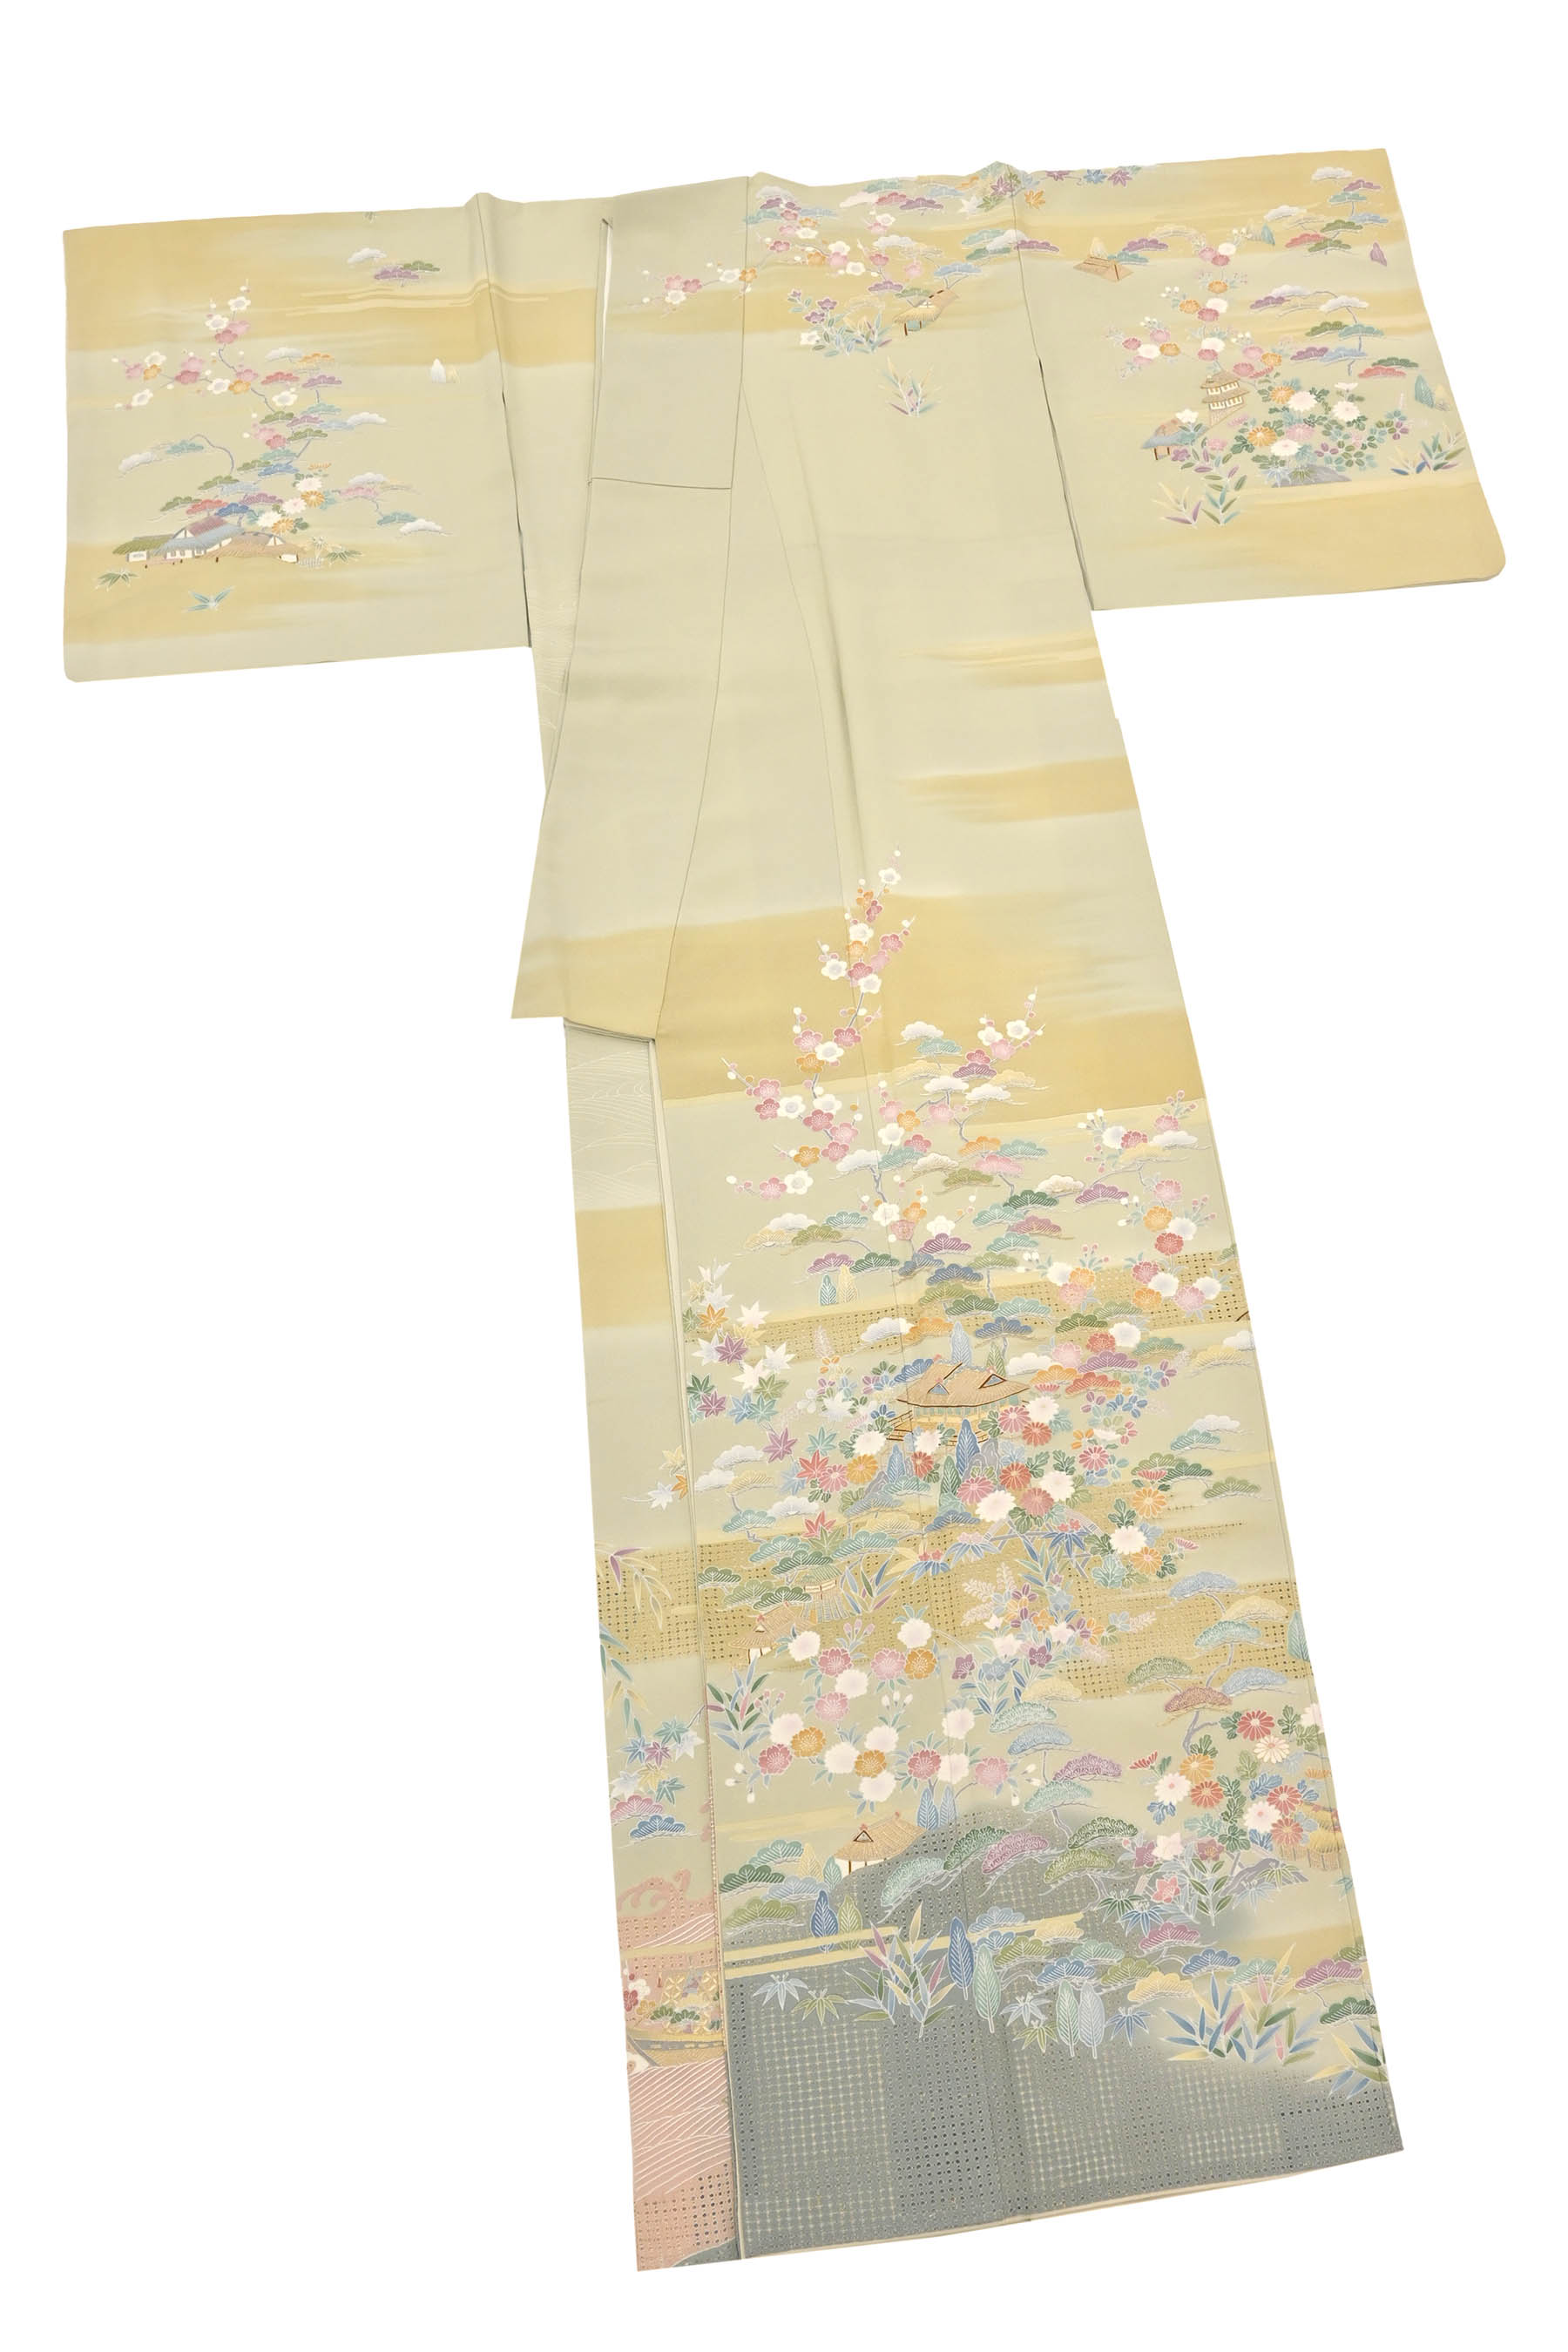 商品詳細 - ”セット価格！” スワトウ刺繍訪問着×【洛陽織物】袋帯 京都